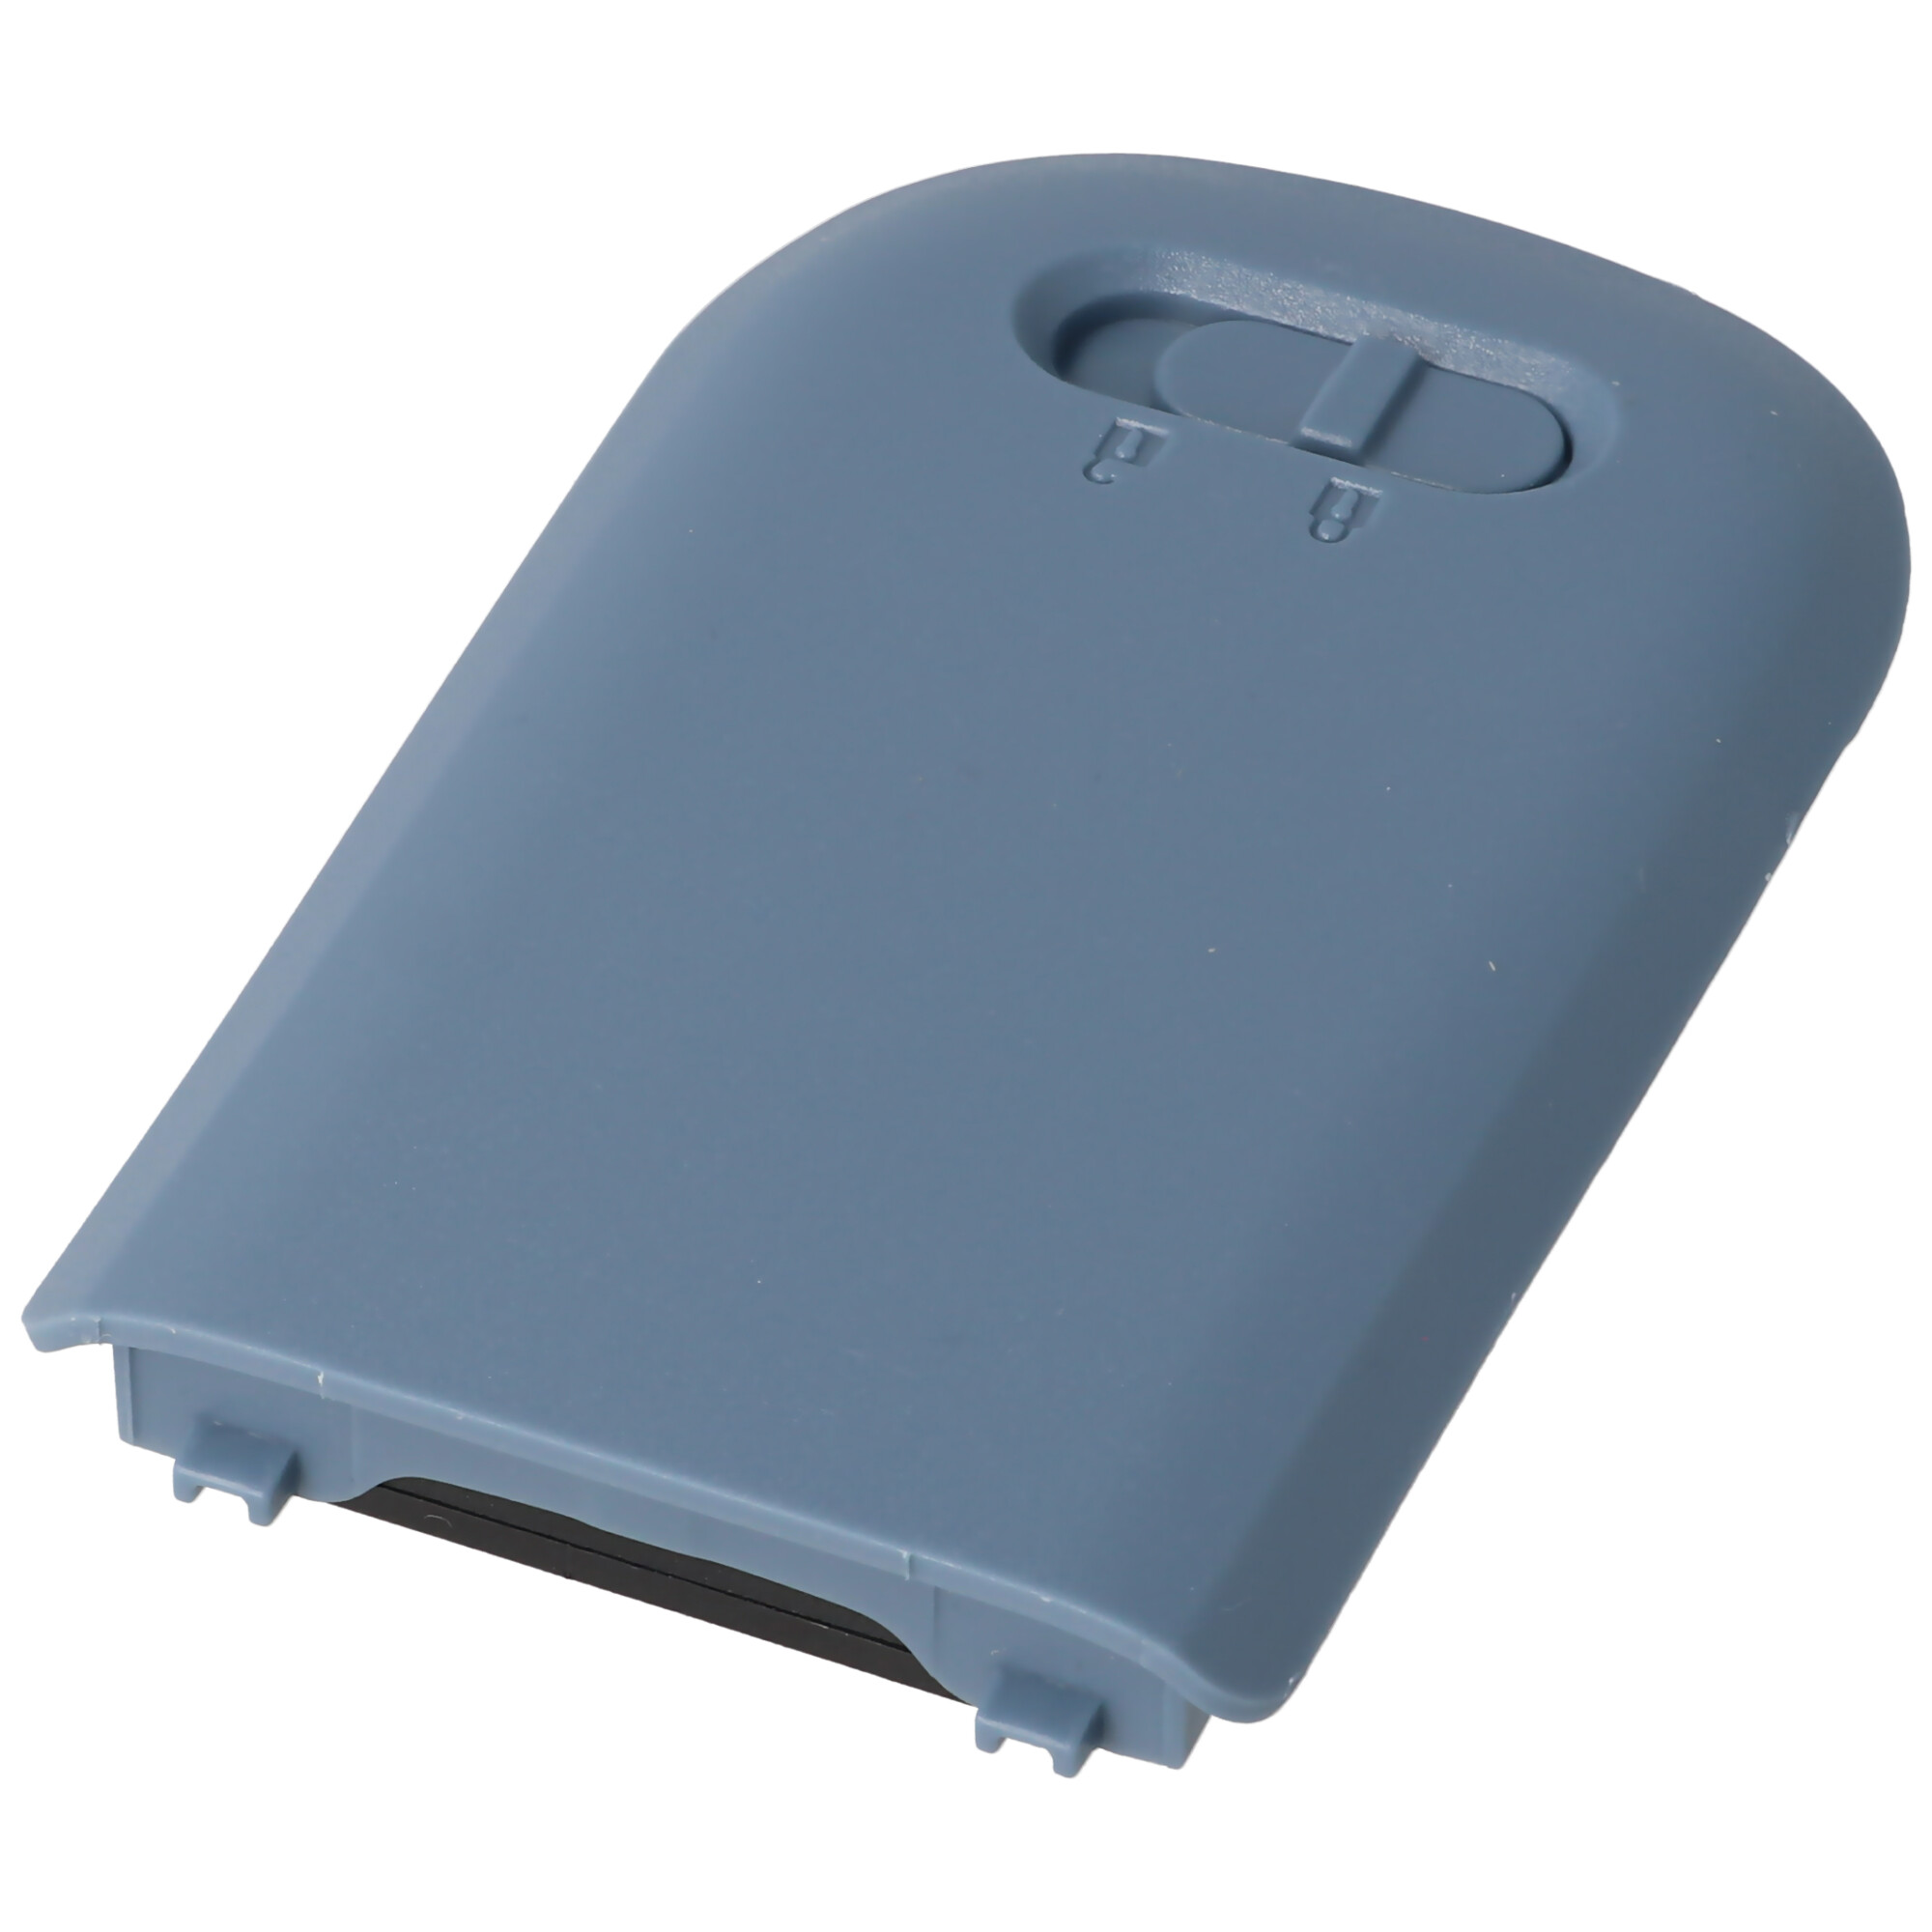 Akku passend für AVAYA 3720 DECT Battery 660190/R1A inklusive Gehäuserückdeckel in blau-grau